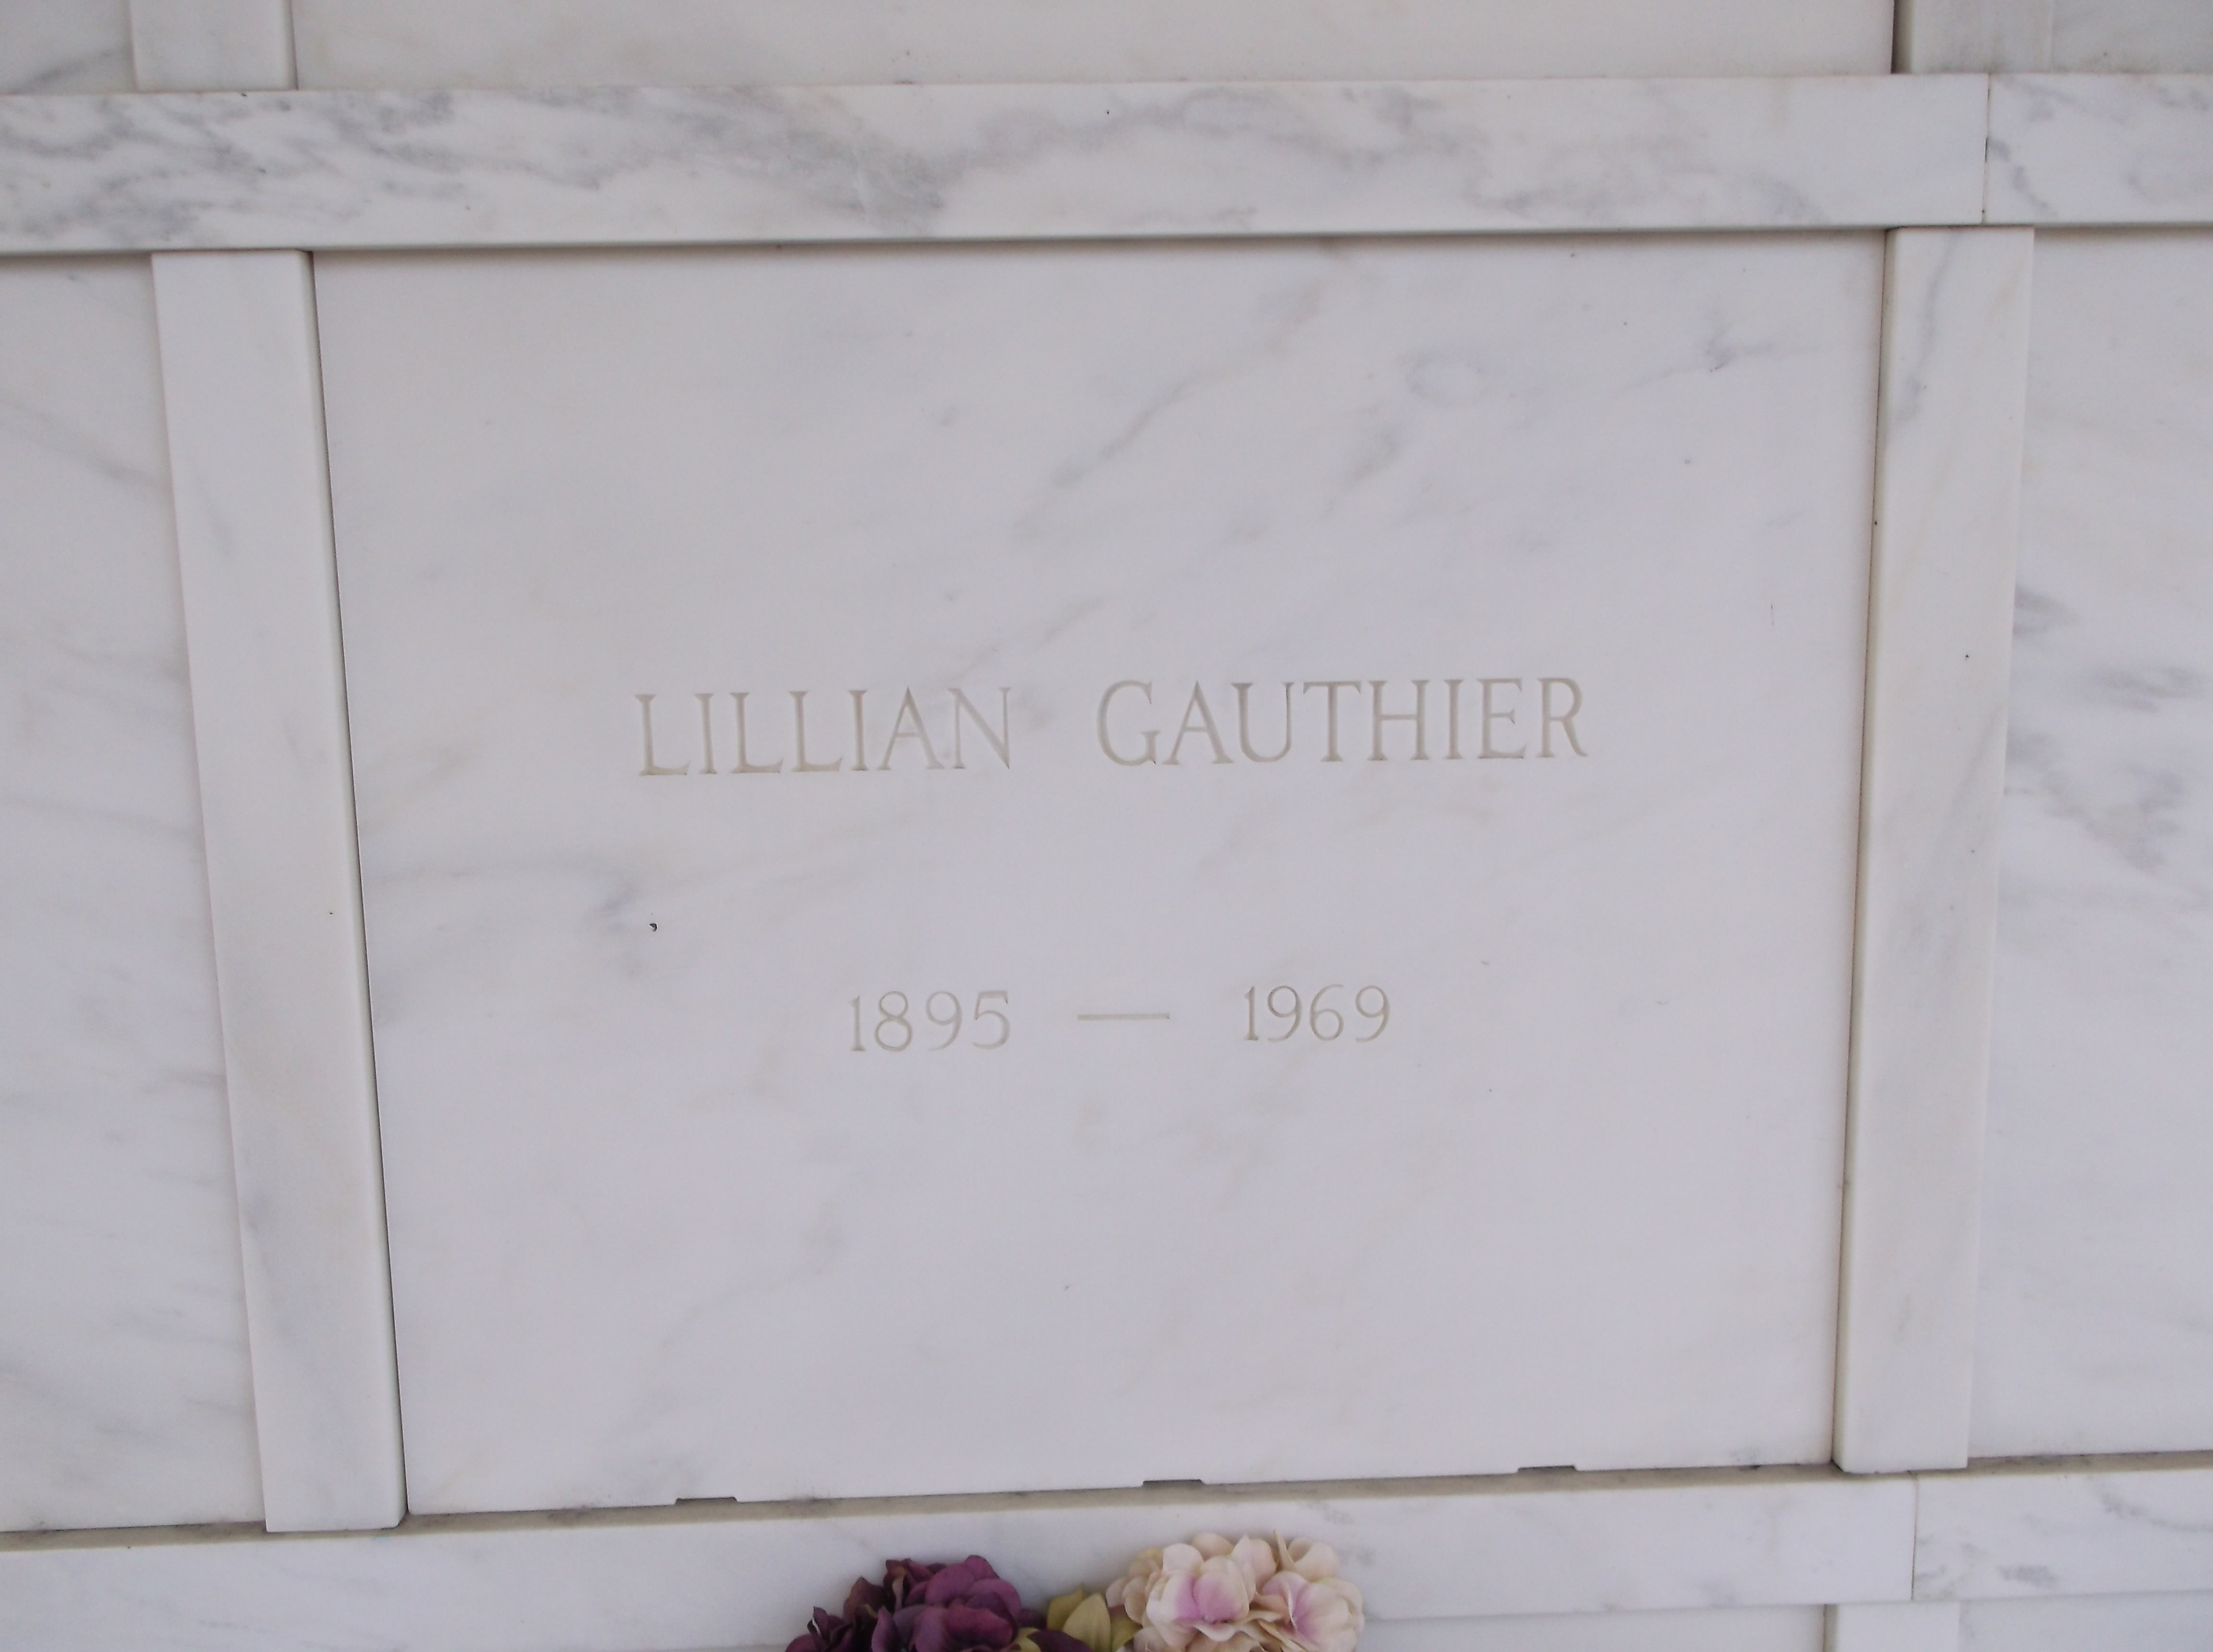 Lillian Gauthier